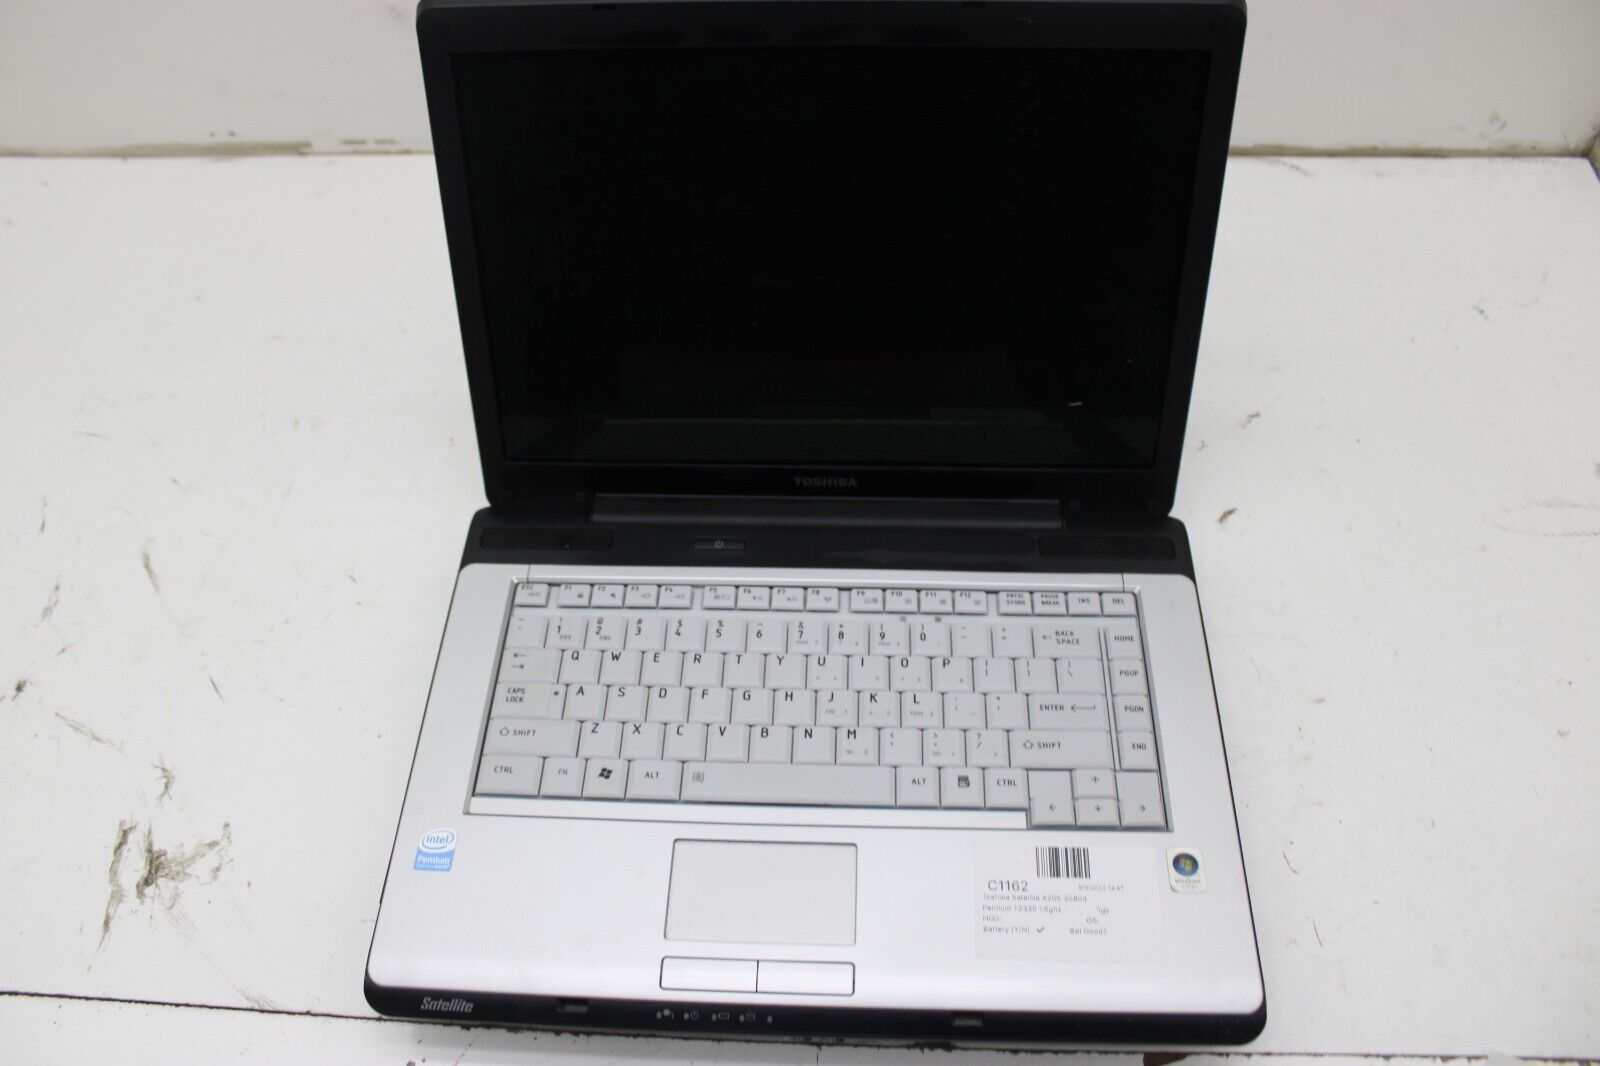 Toshiba Satellite A205-S5804 Laptop Intel Pentium T2330 1GB Ram No HDD Bad Batt